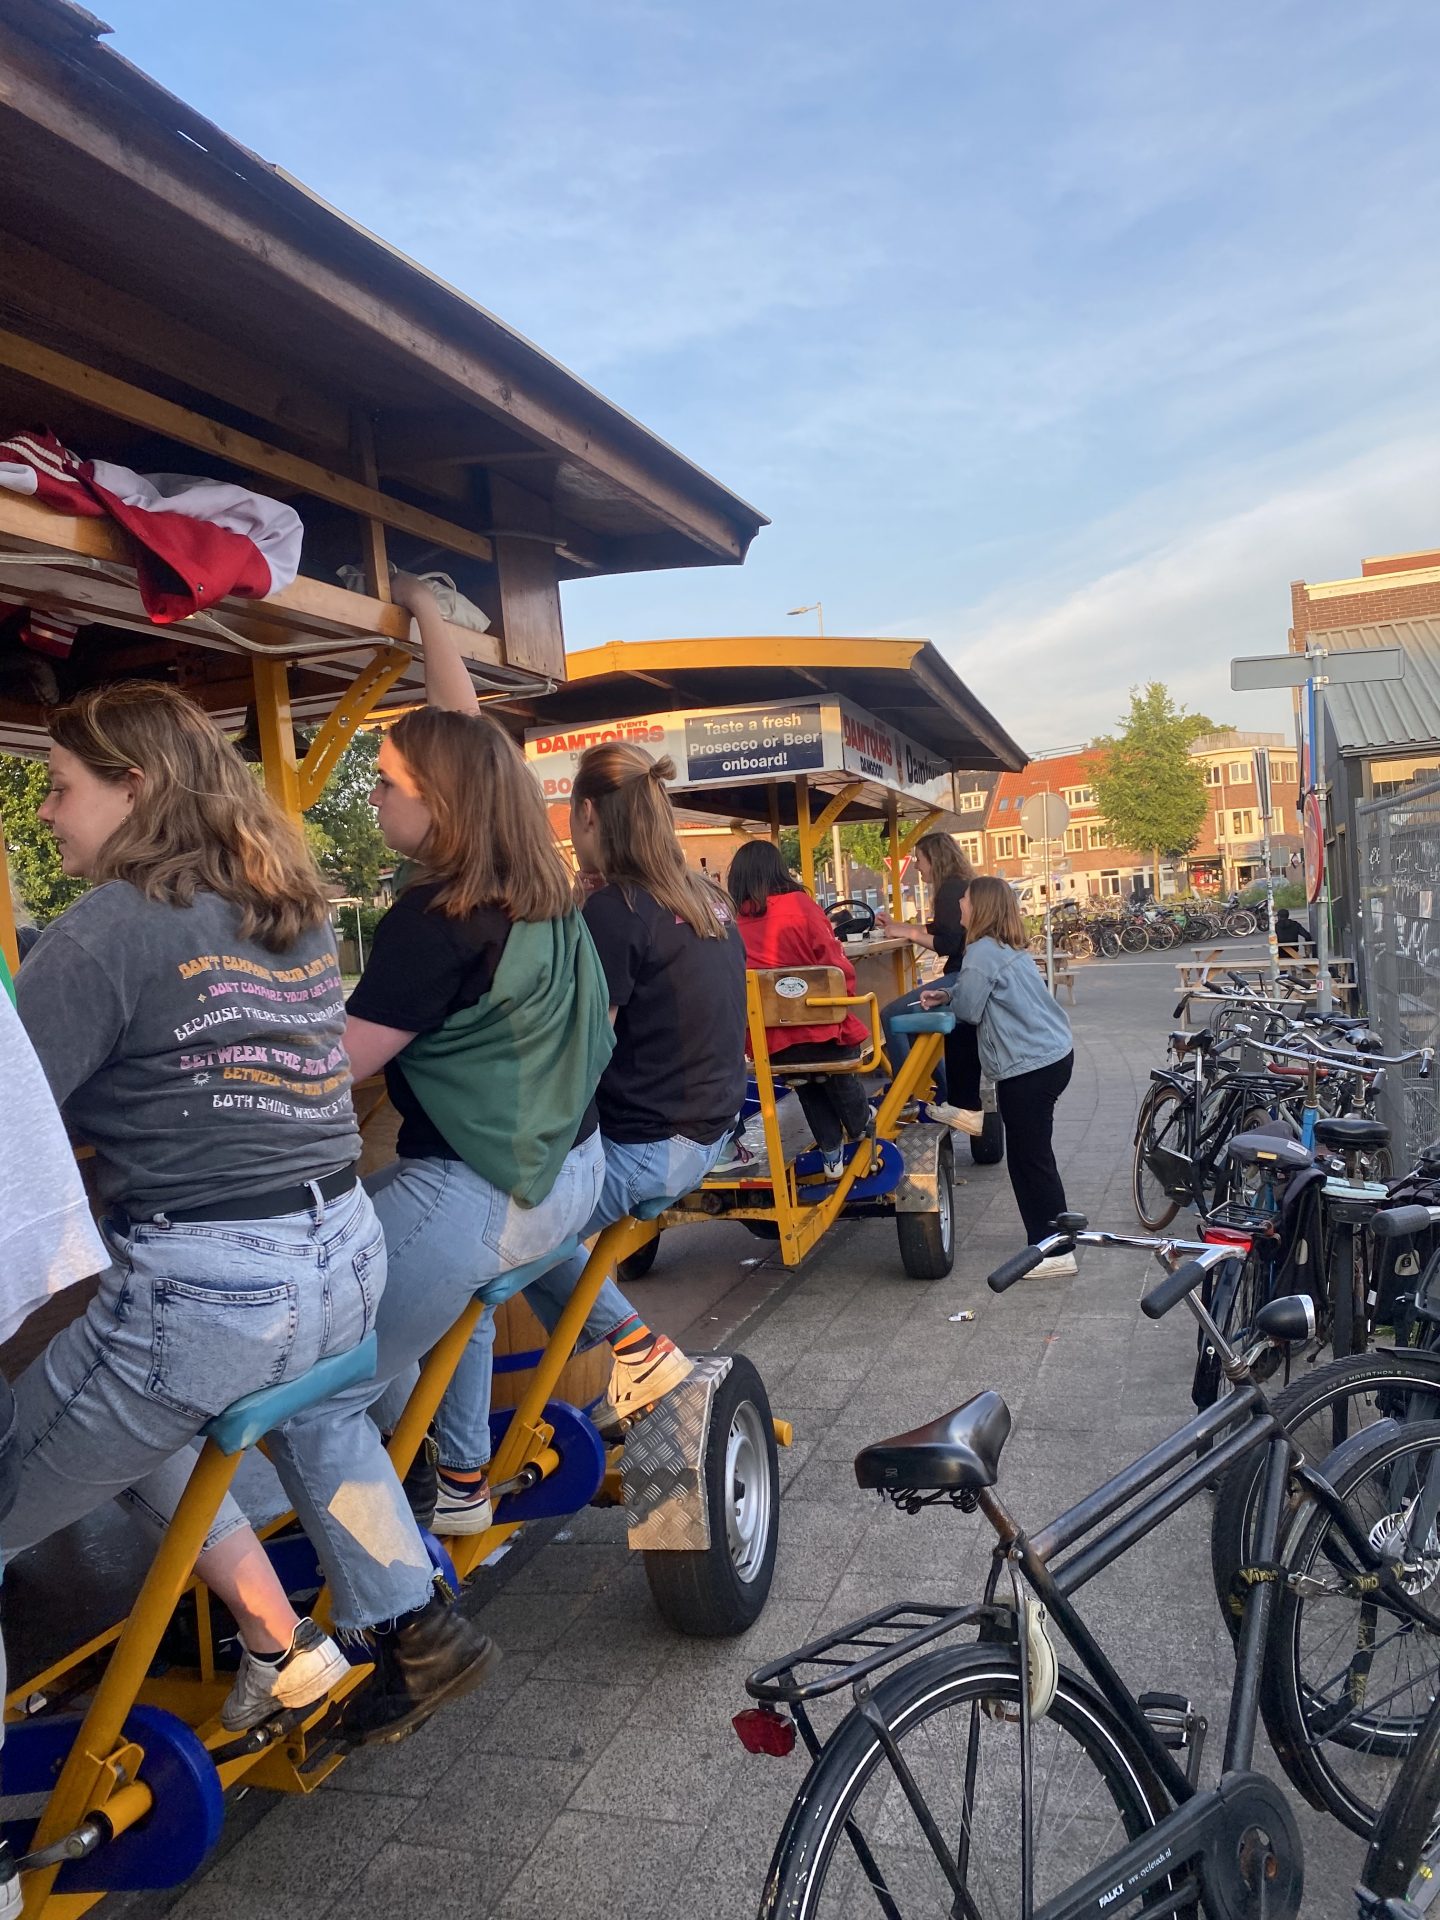 Bierfiets - Beer bike - Amsterdã - Rotterdam - Prosecco Bike - proseccofiets